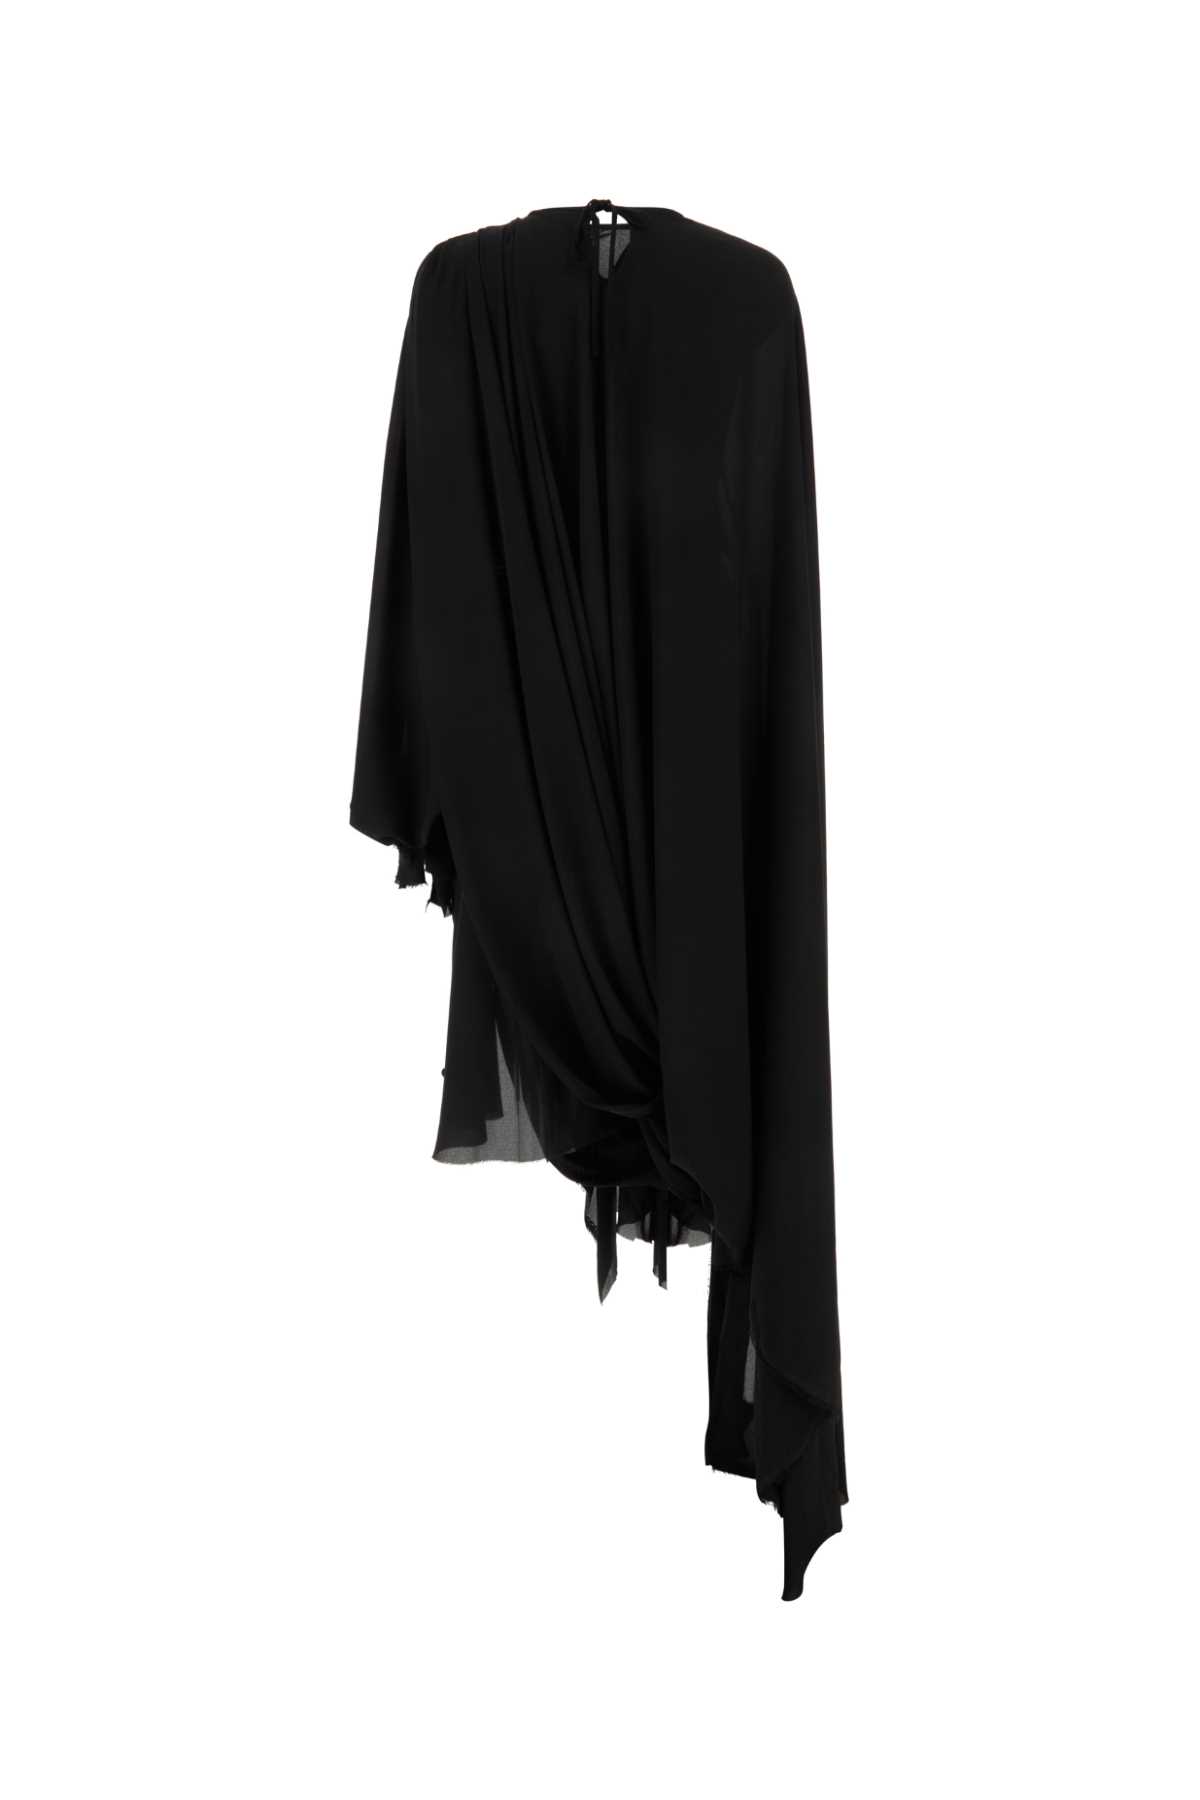 Balenciaga Black Crepe Dress